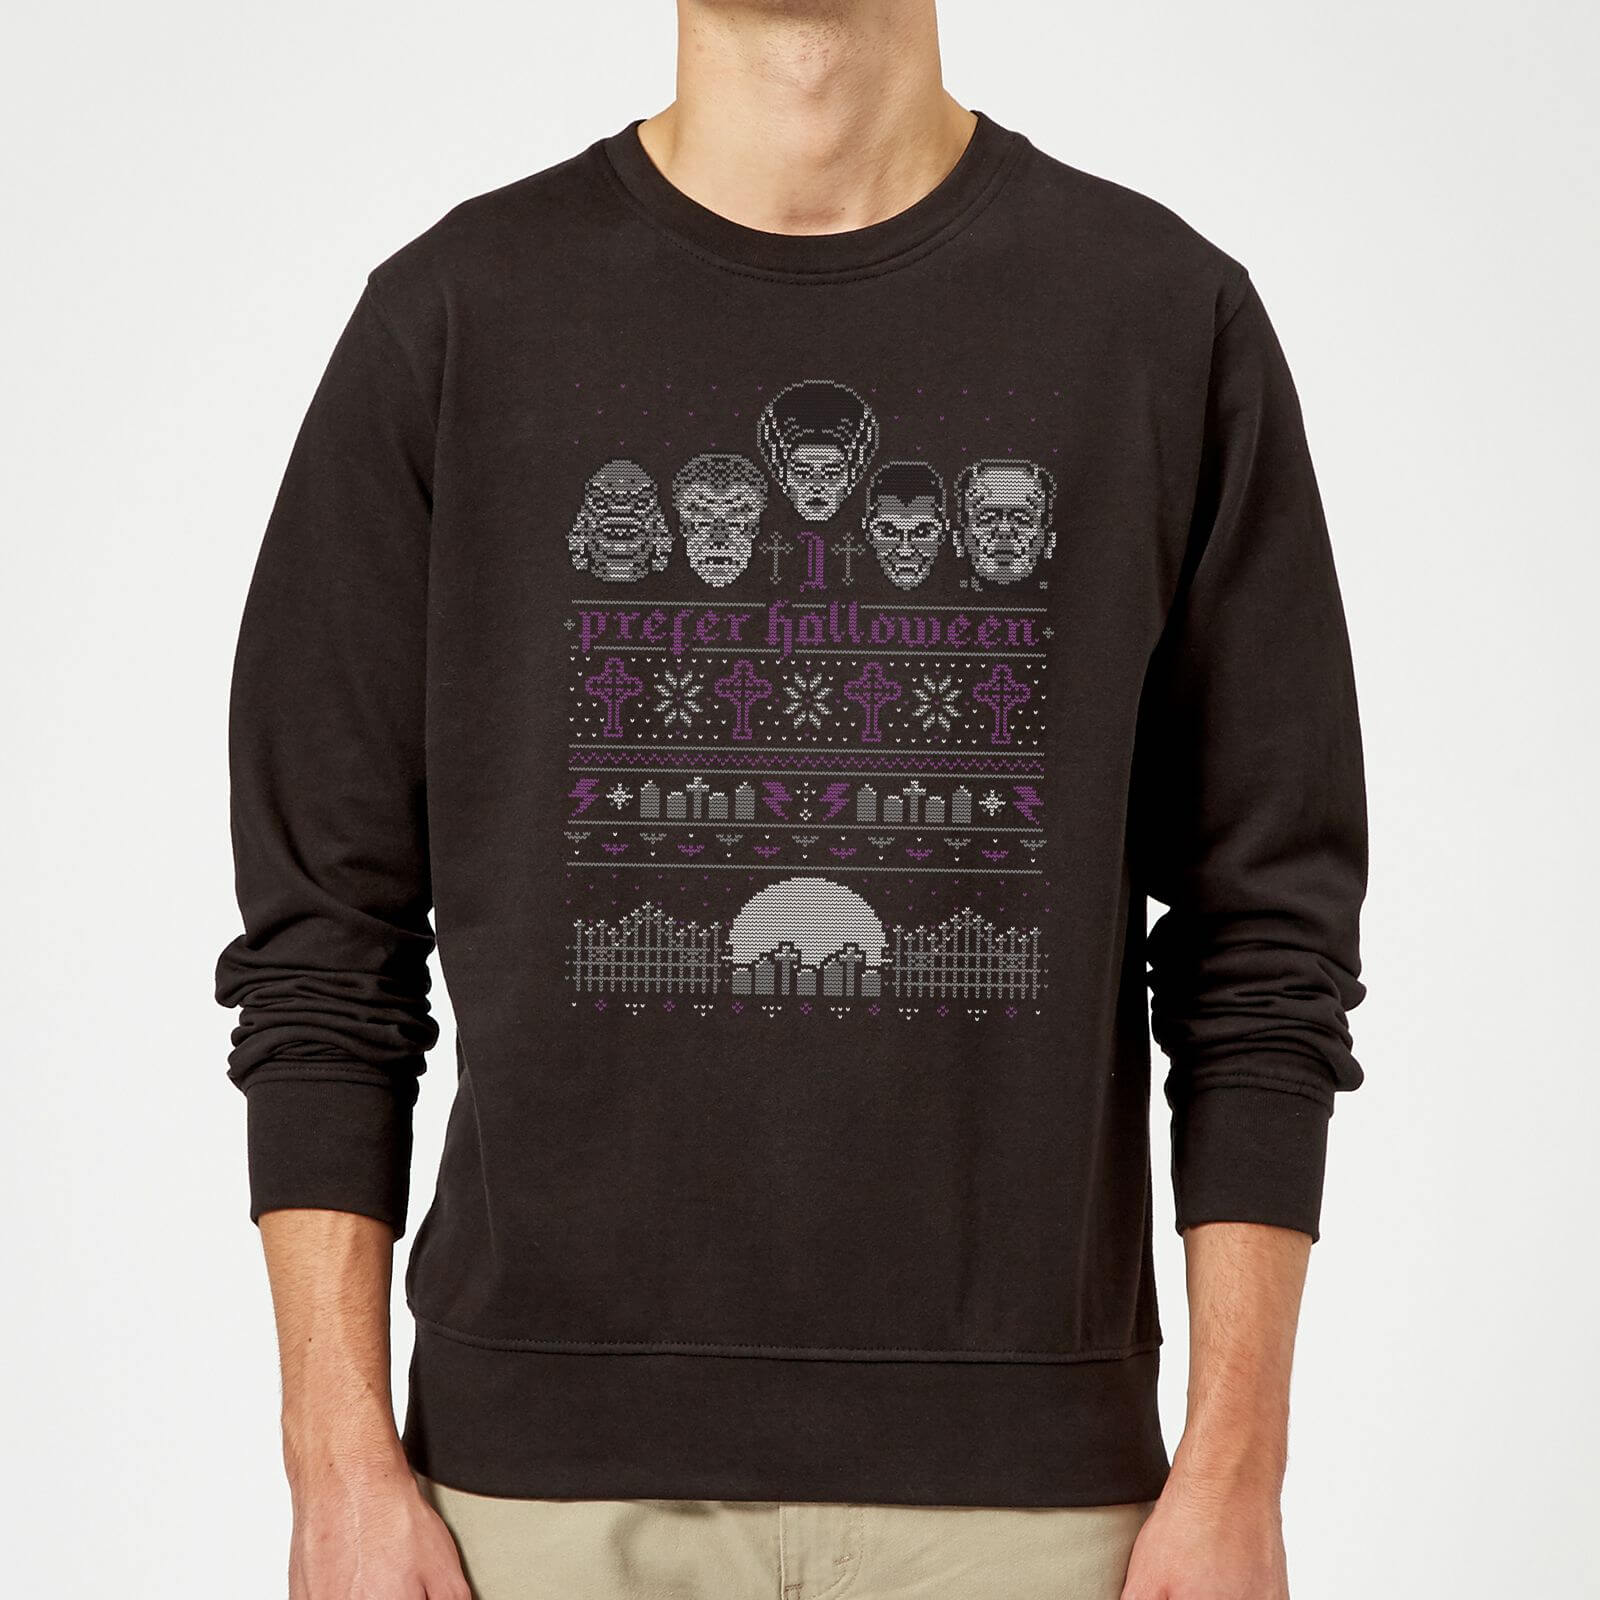 Universal Monsters I Prefer Halloween Christmas Sweatshirt - Black - M